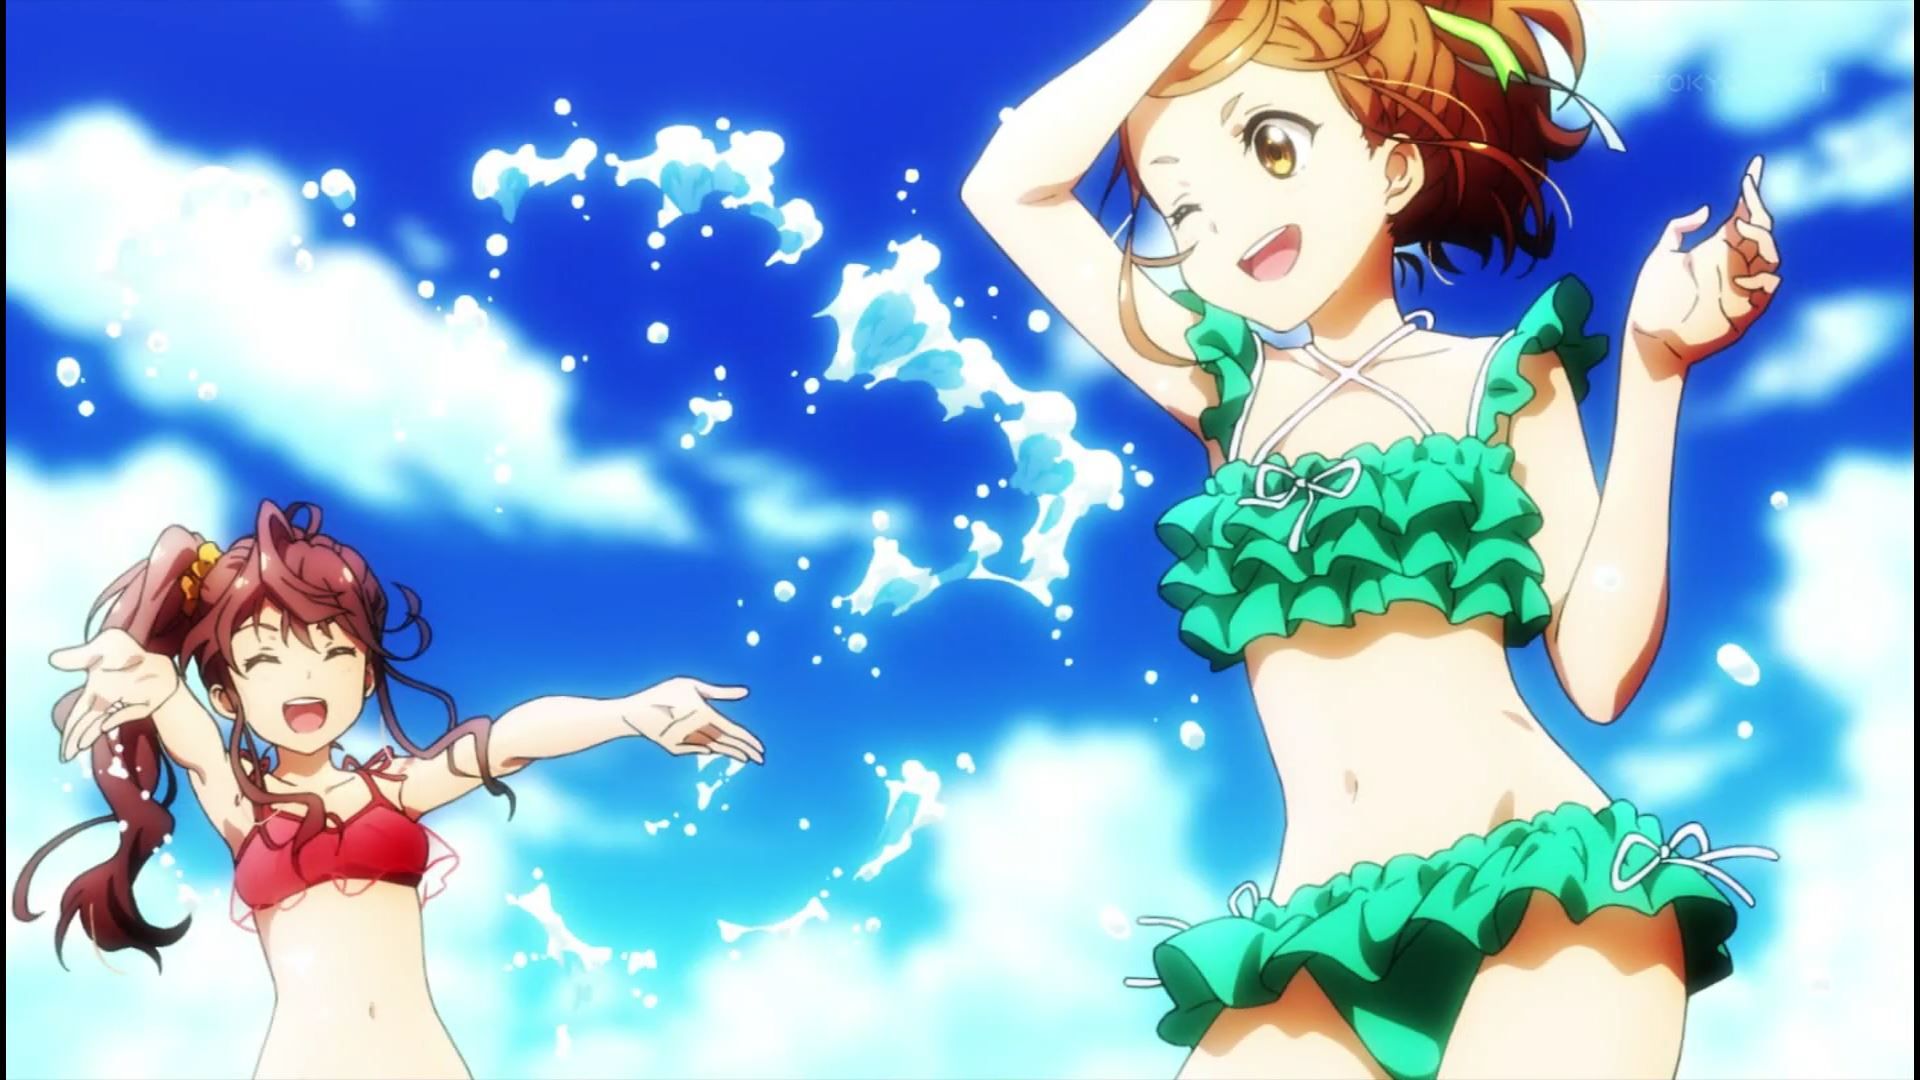 Anime [22/7 (Nanabun Nonijuuni)] 6 episodes erotic scene of girls erotic swimsuit! 13